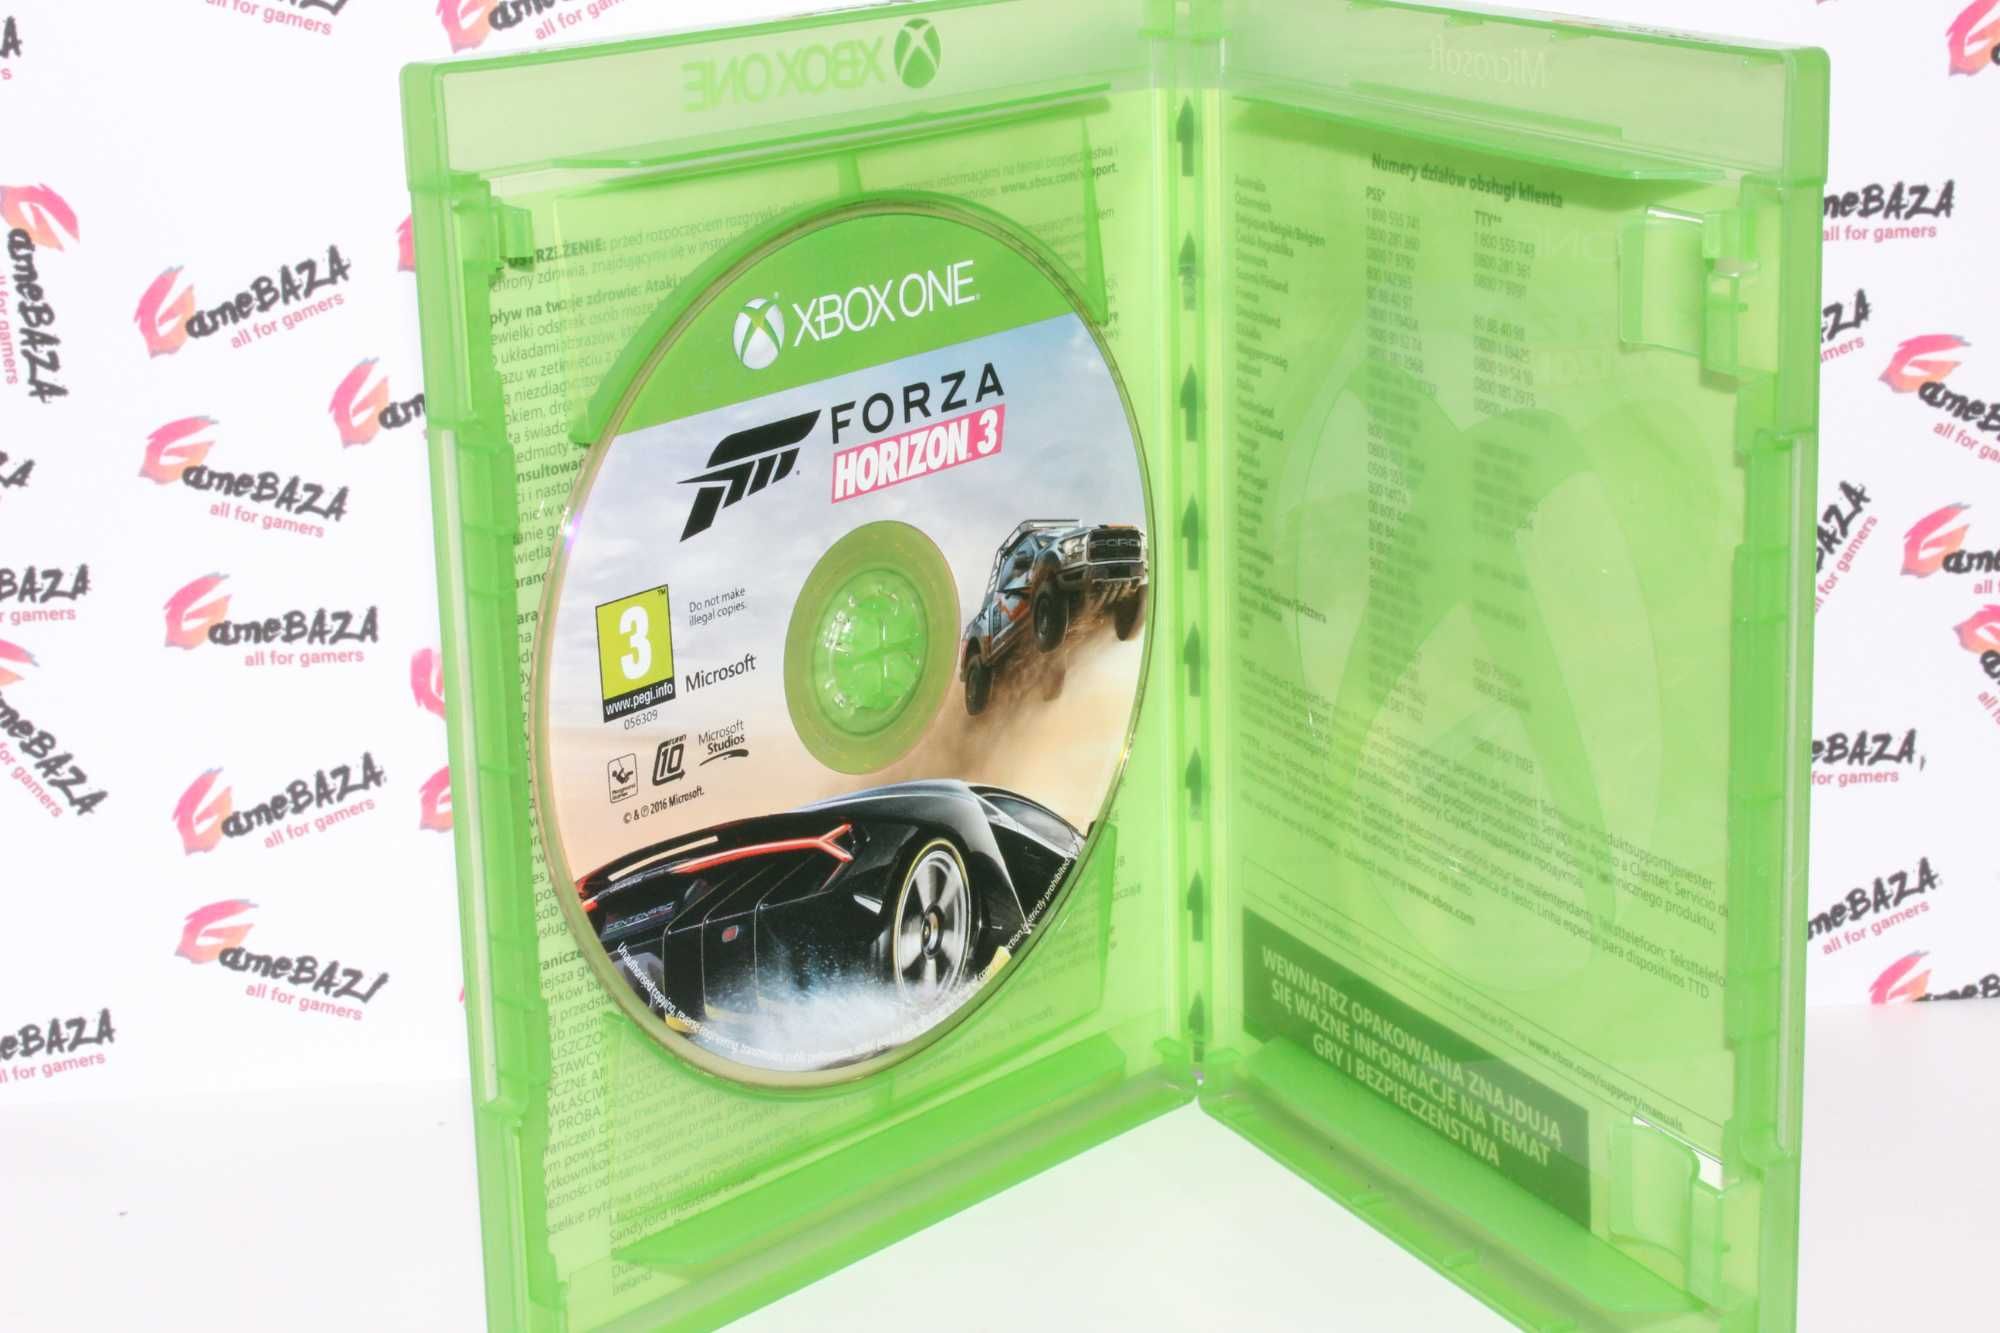 => PL Forza Horizon 3 Xbox One GameBAZA